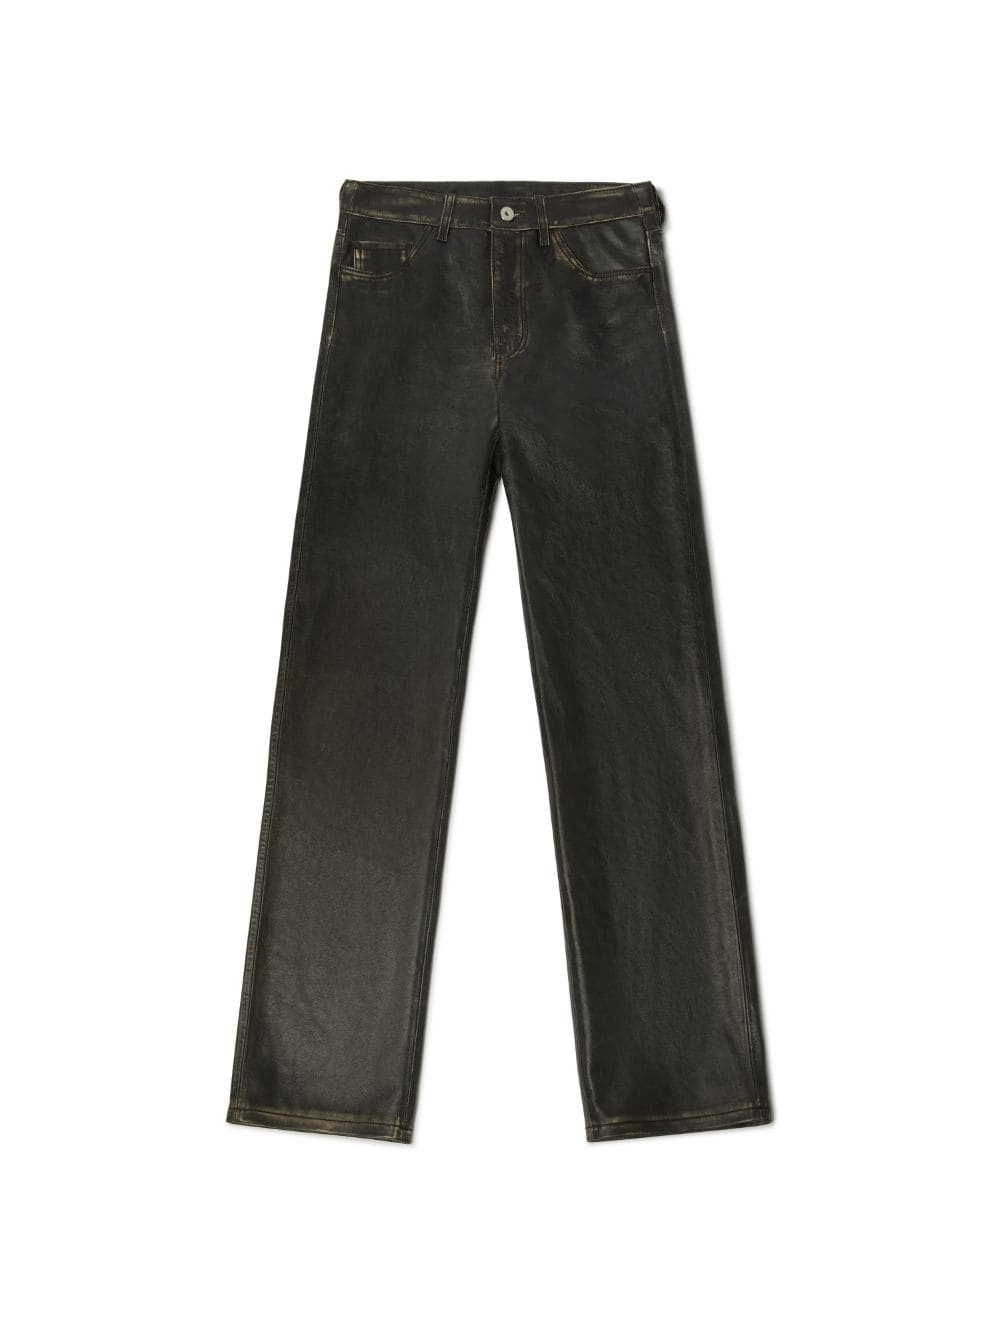 Distressed Leather Reg Pants - 1